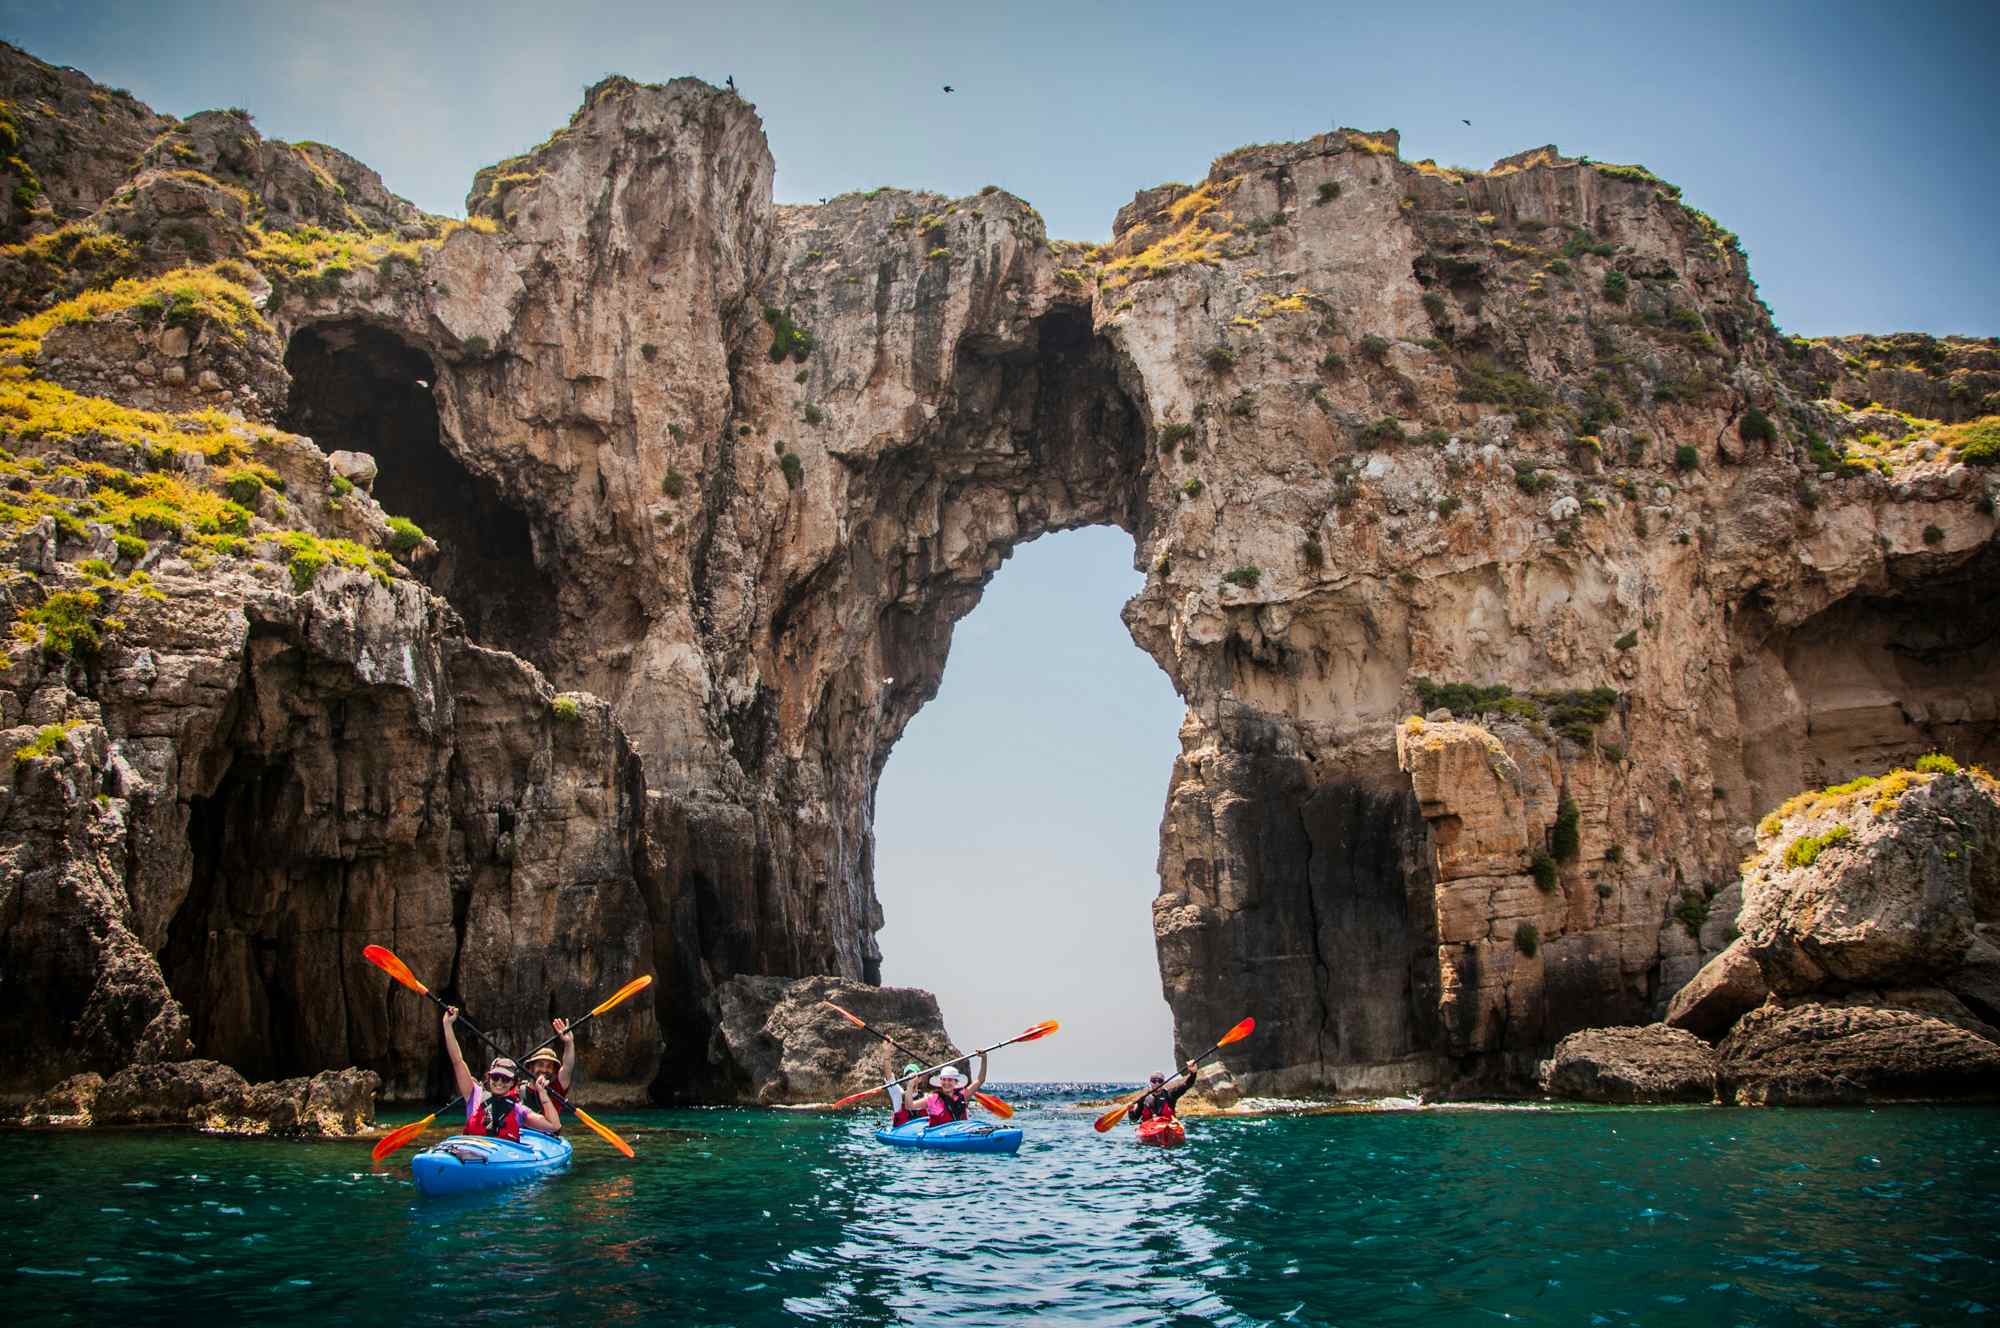 Kayaking Navarino Bay, Peloponnese
Host image: Explore Messinia 